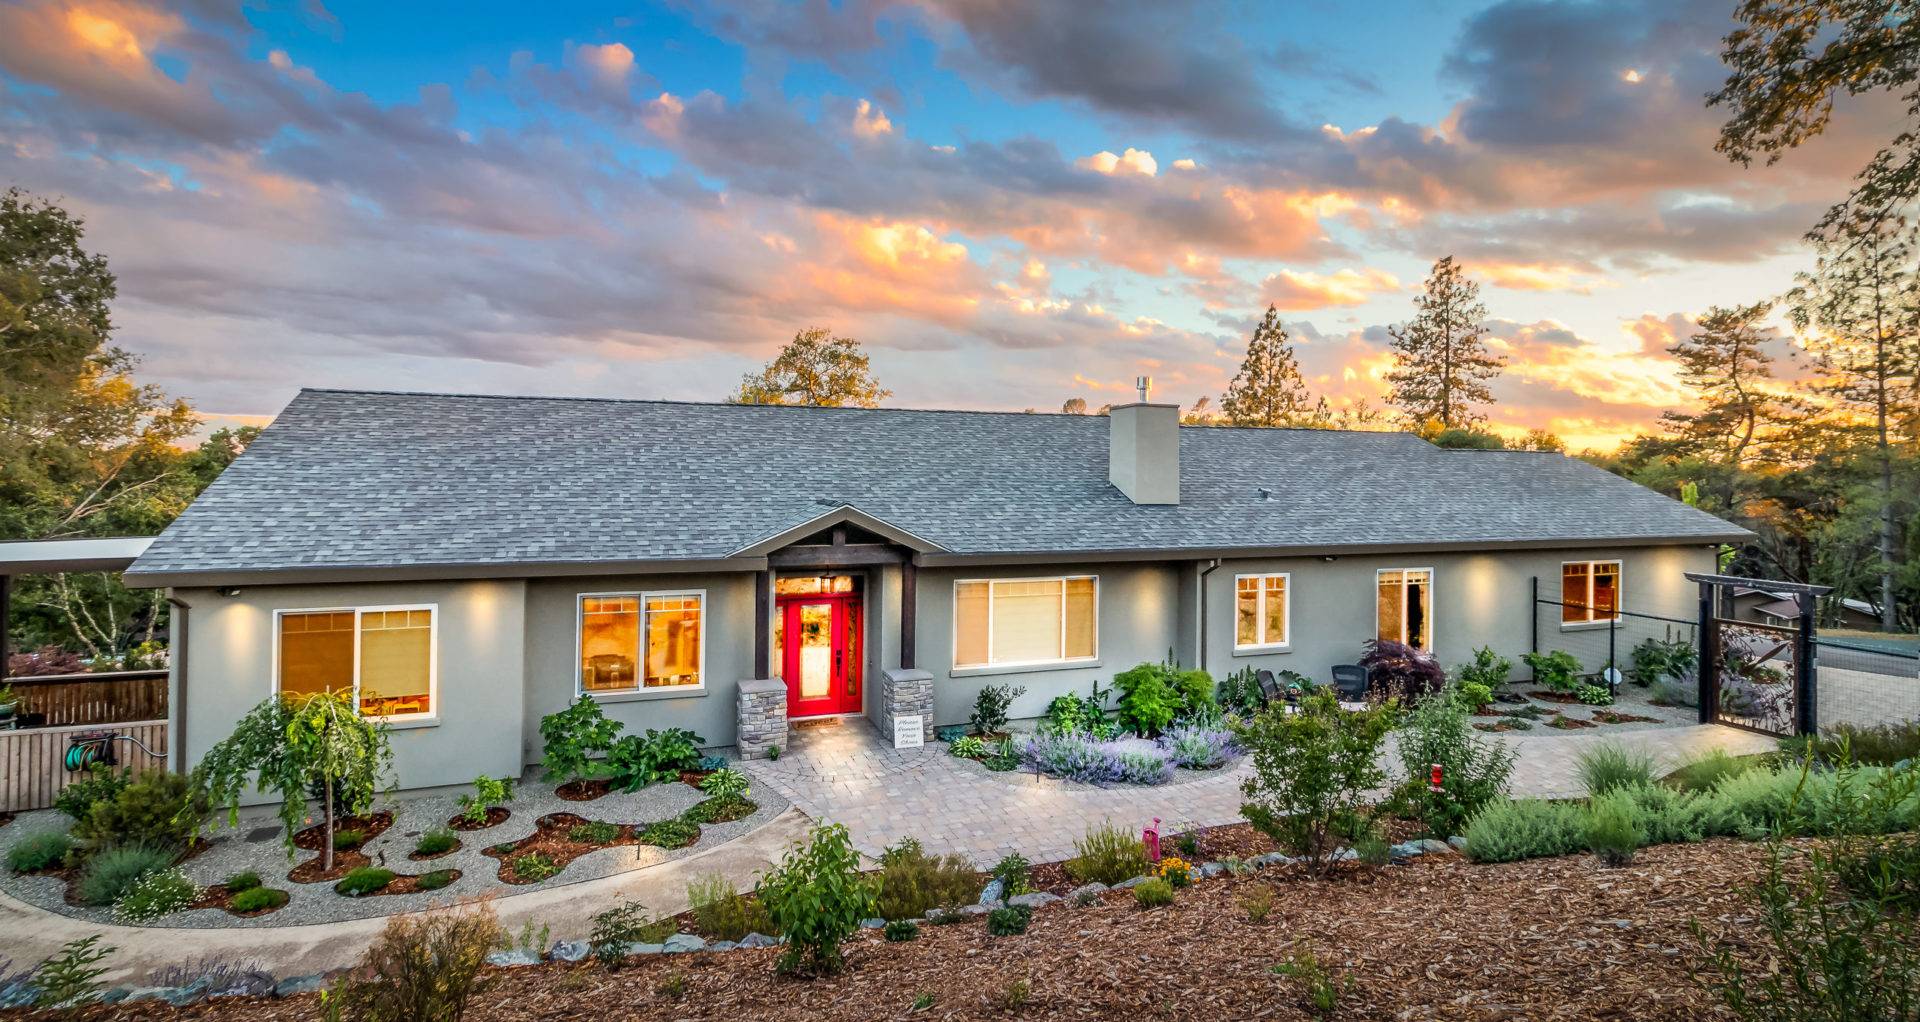 Single story home in Auburn, California